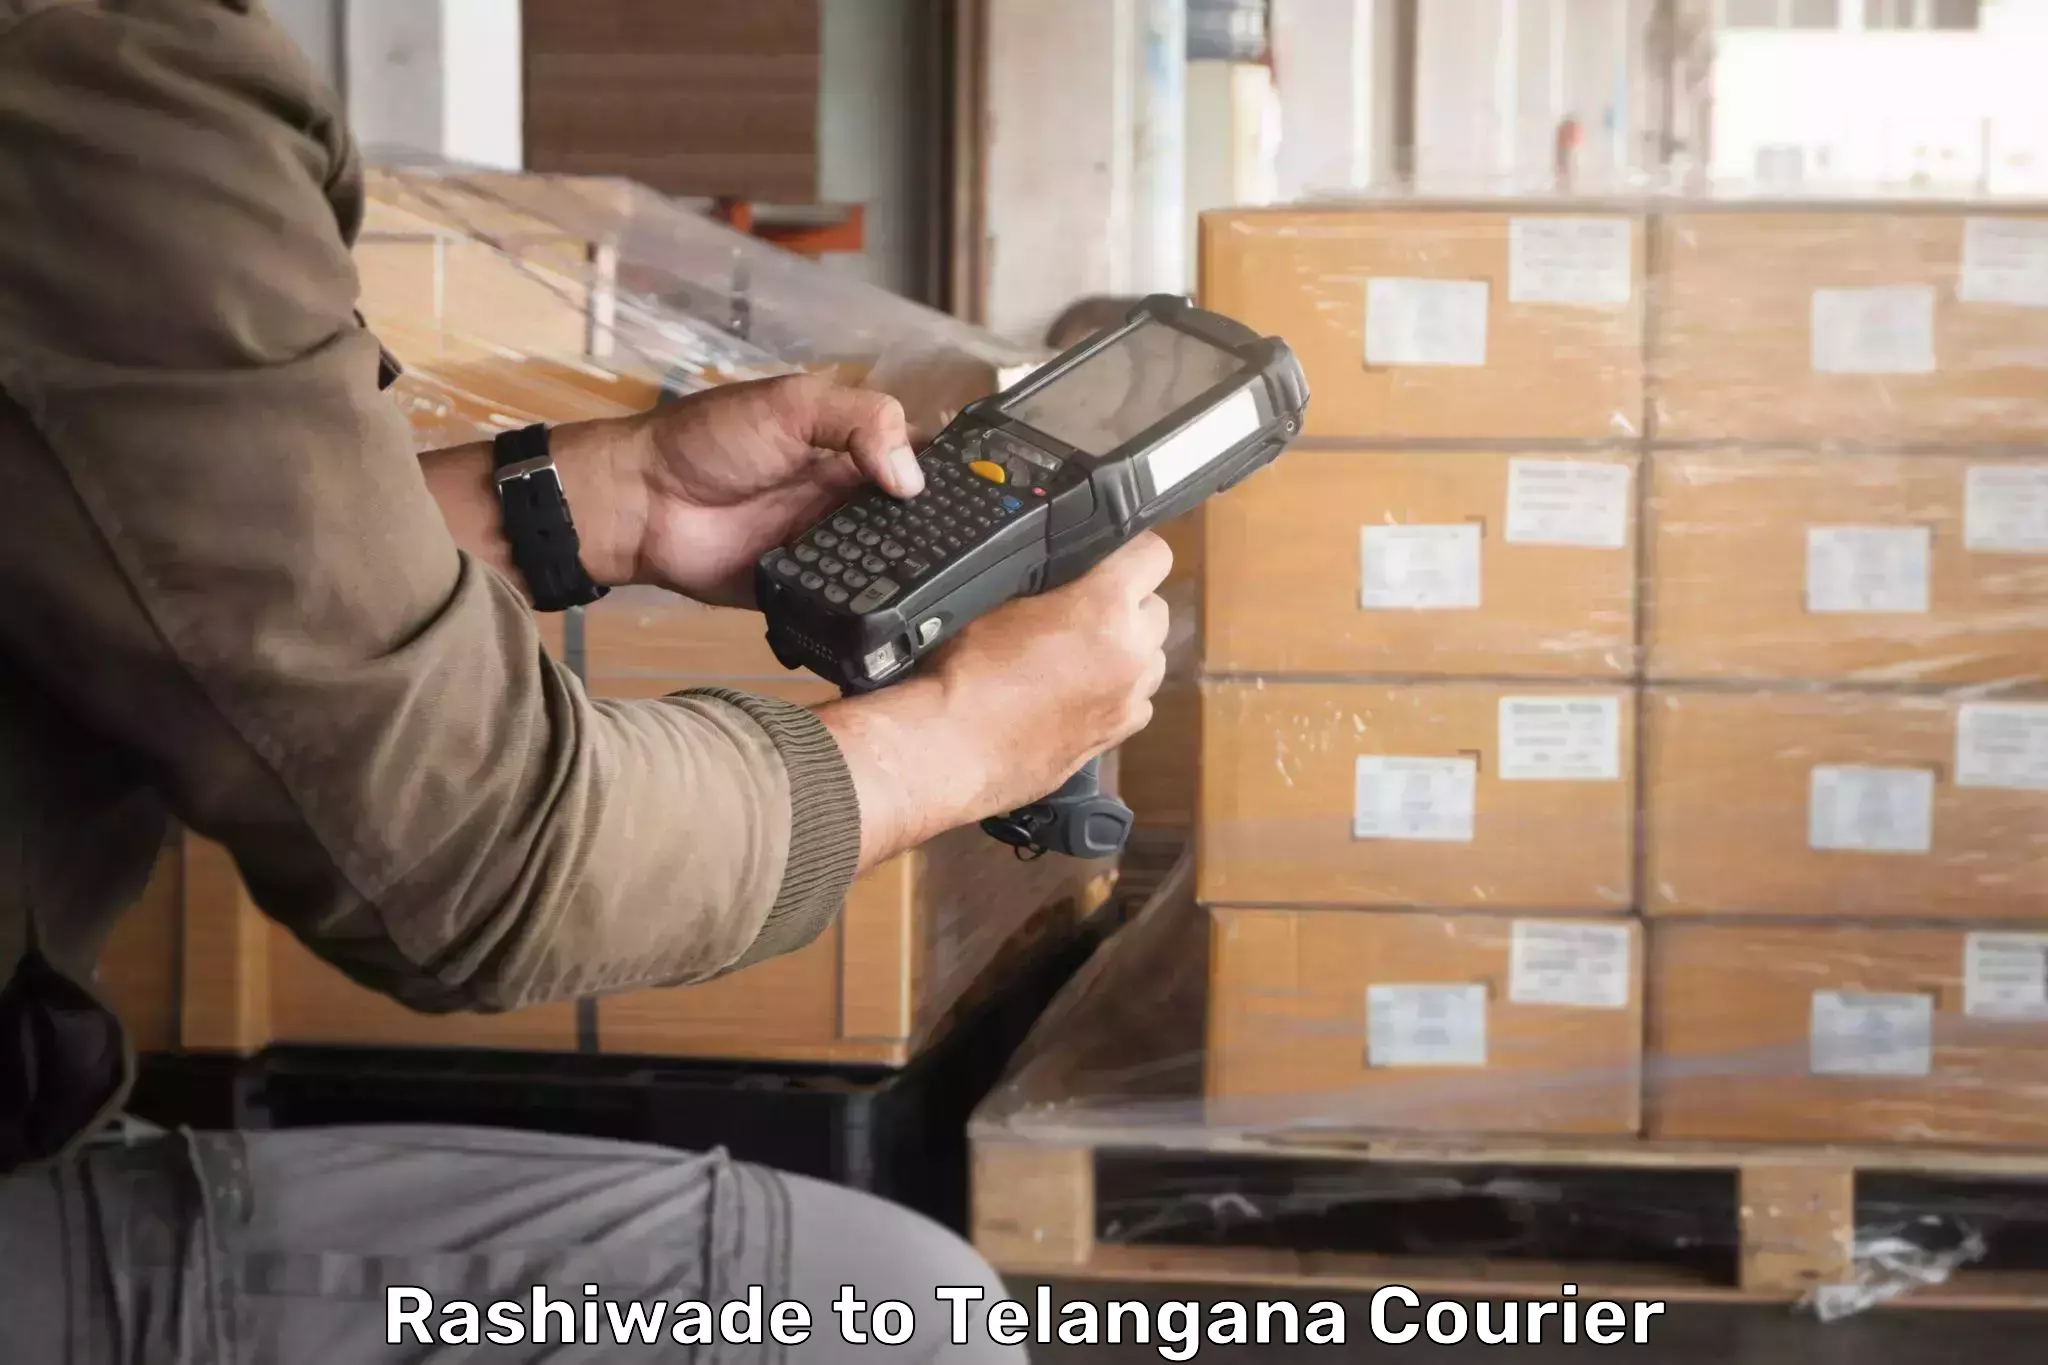 Courier service innovation Rashiwade to Peddapalli